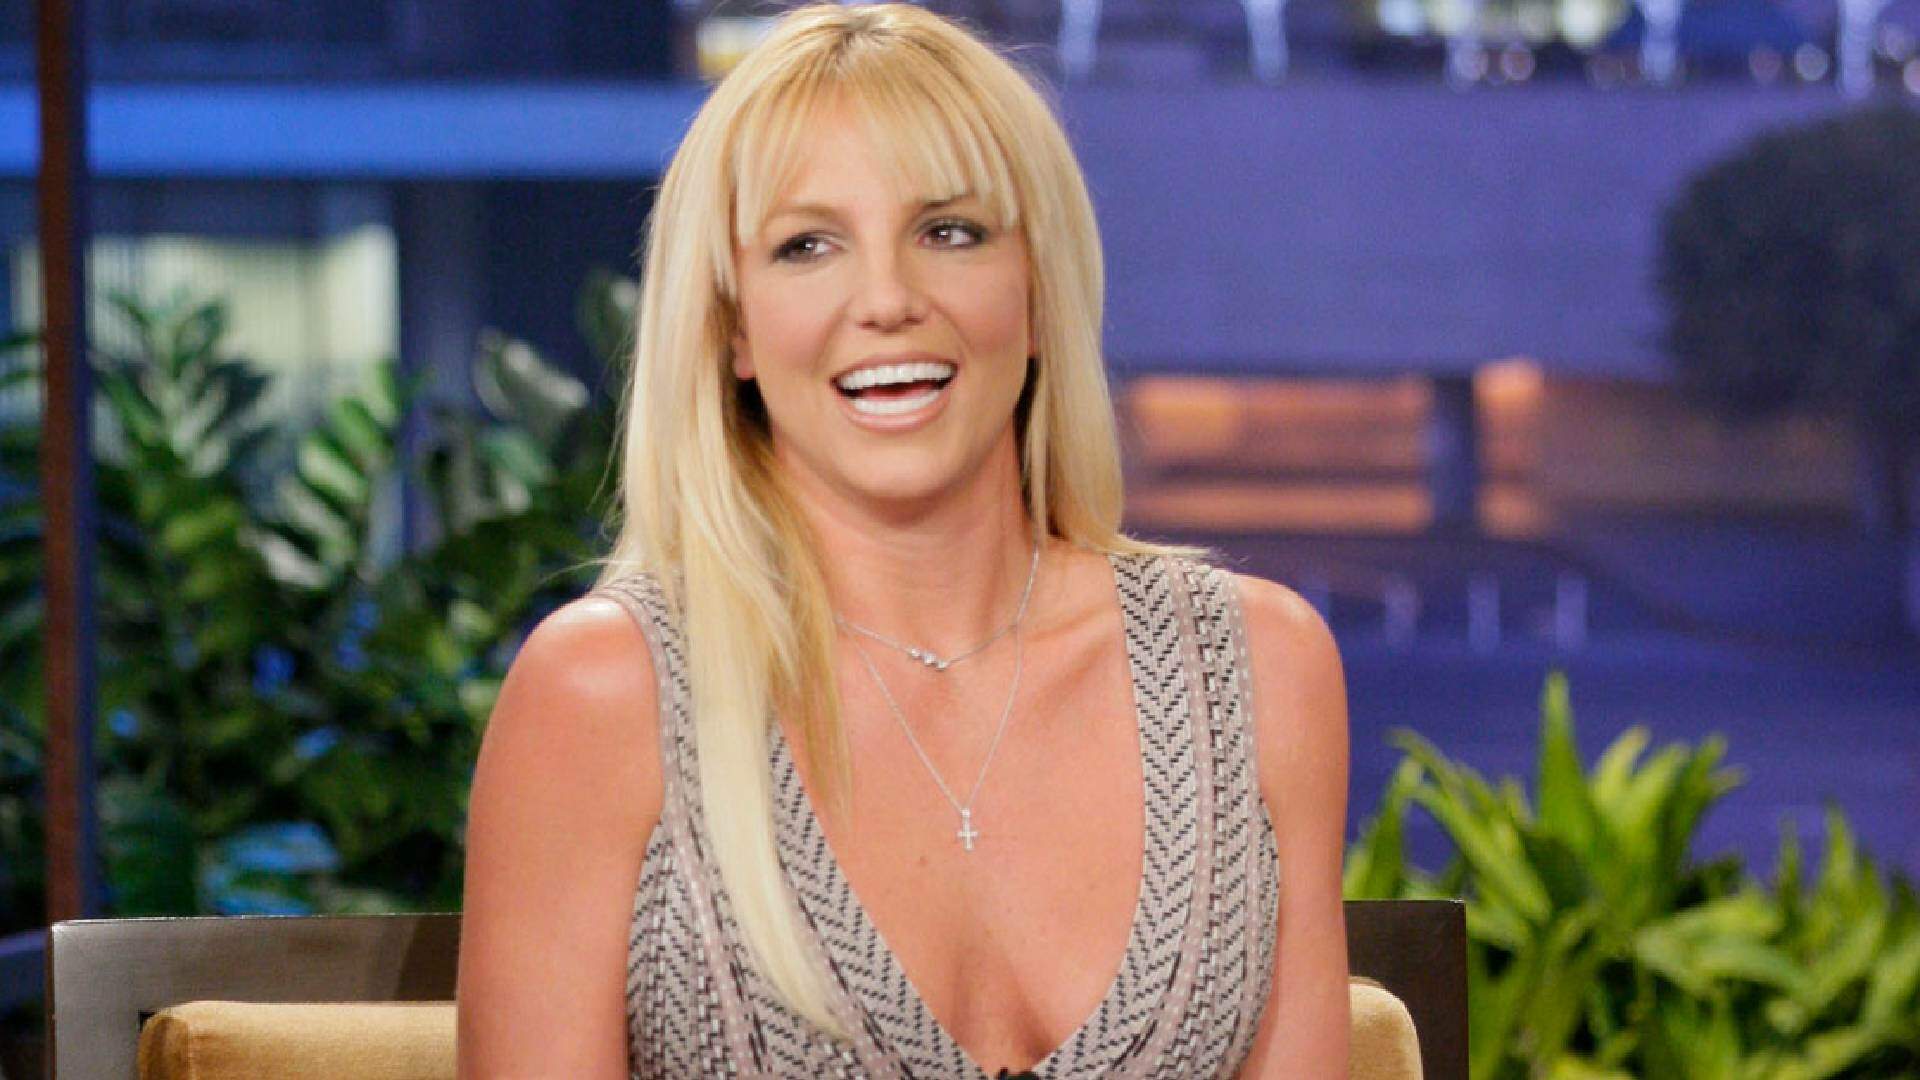 Em vídeo, Britney Spears enaltece importância musical de famoso astro pop: “gênio atemporal”